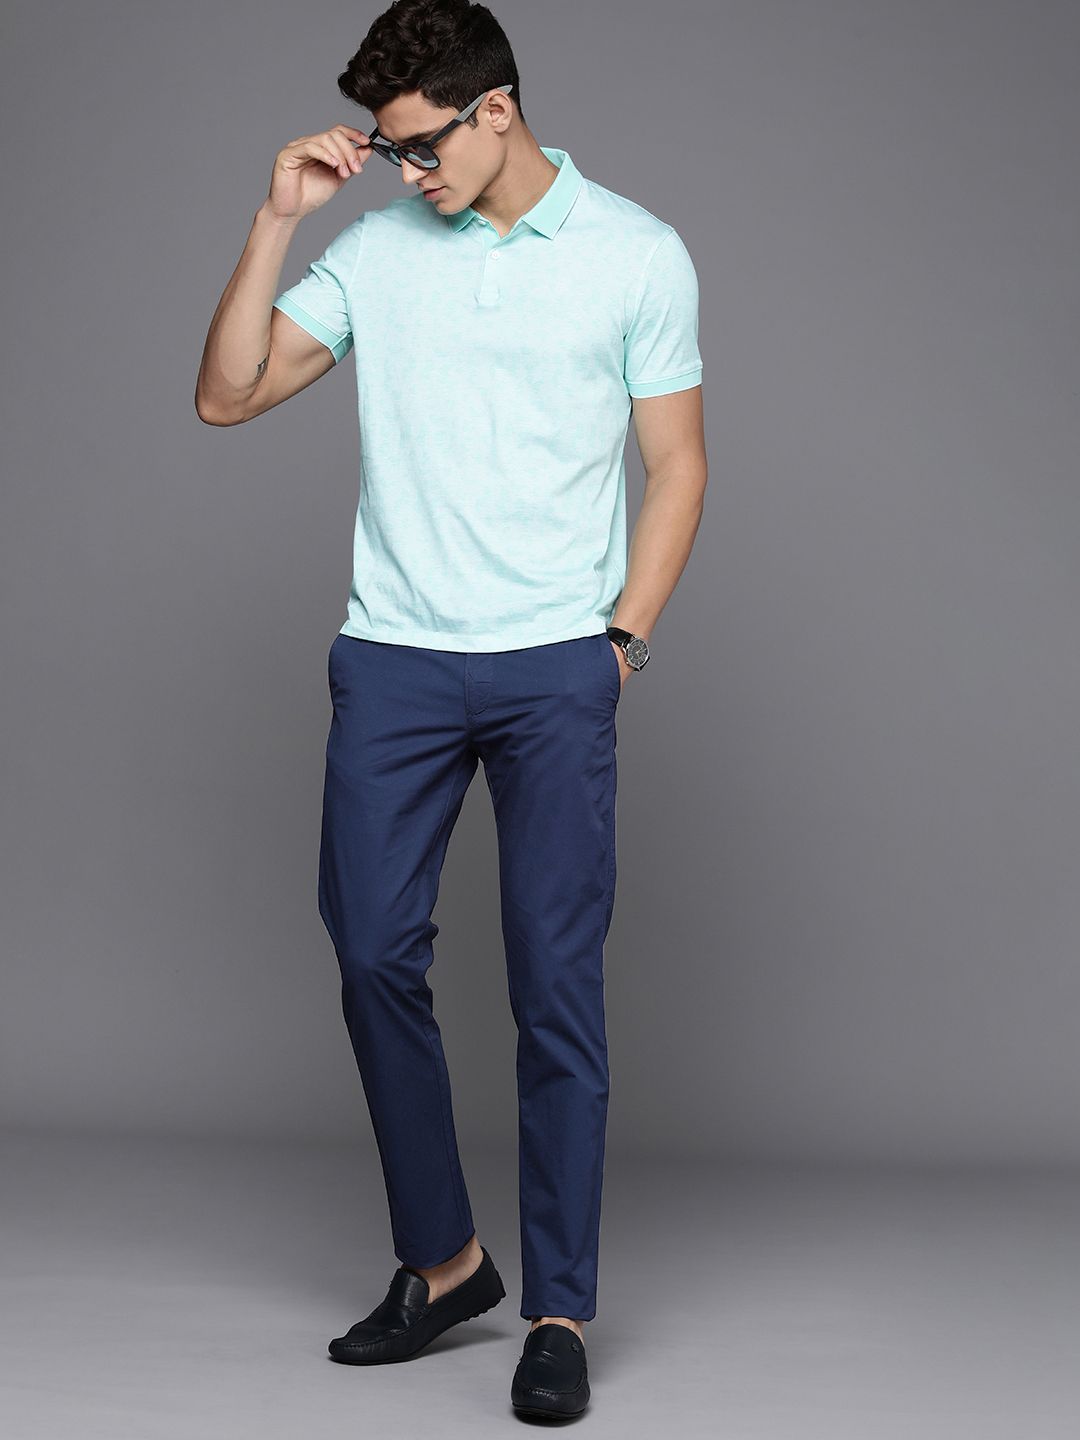 Louis Philippe Sport Men Blue Super Slim Fit Solid Casual Shirt